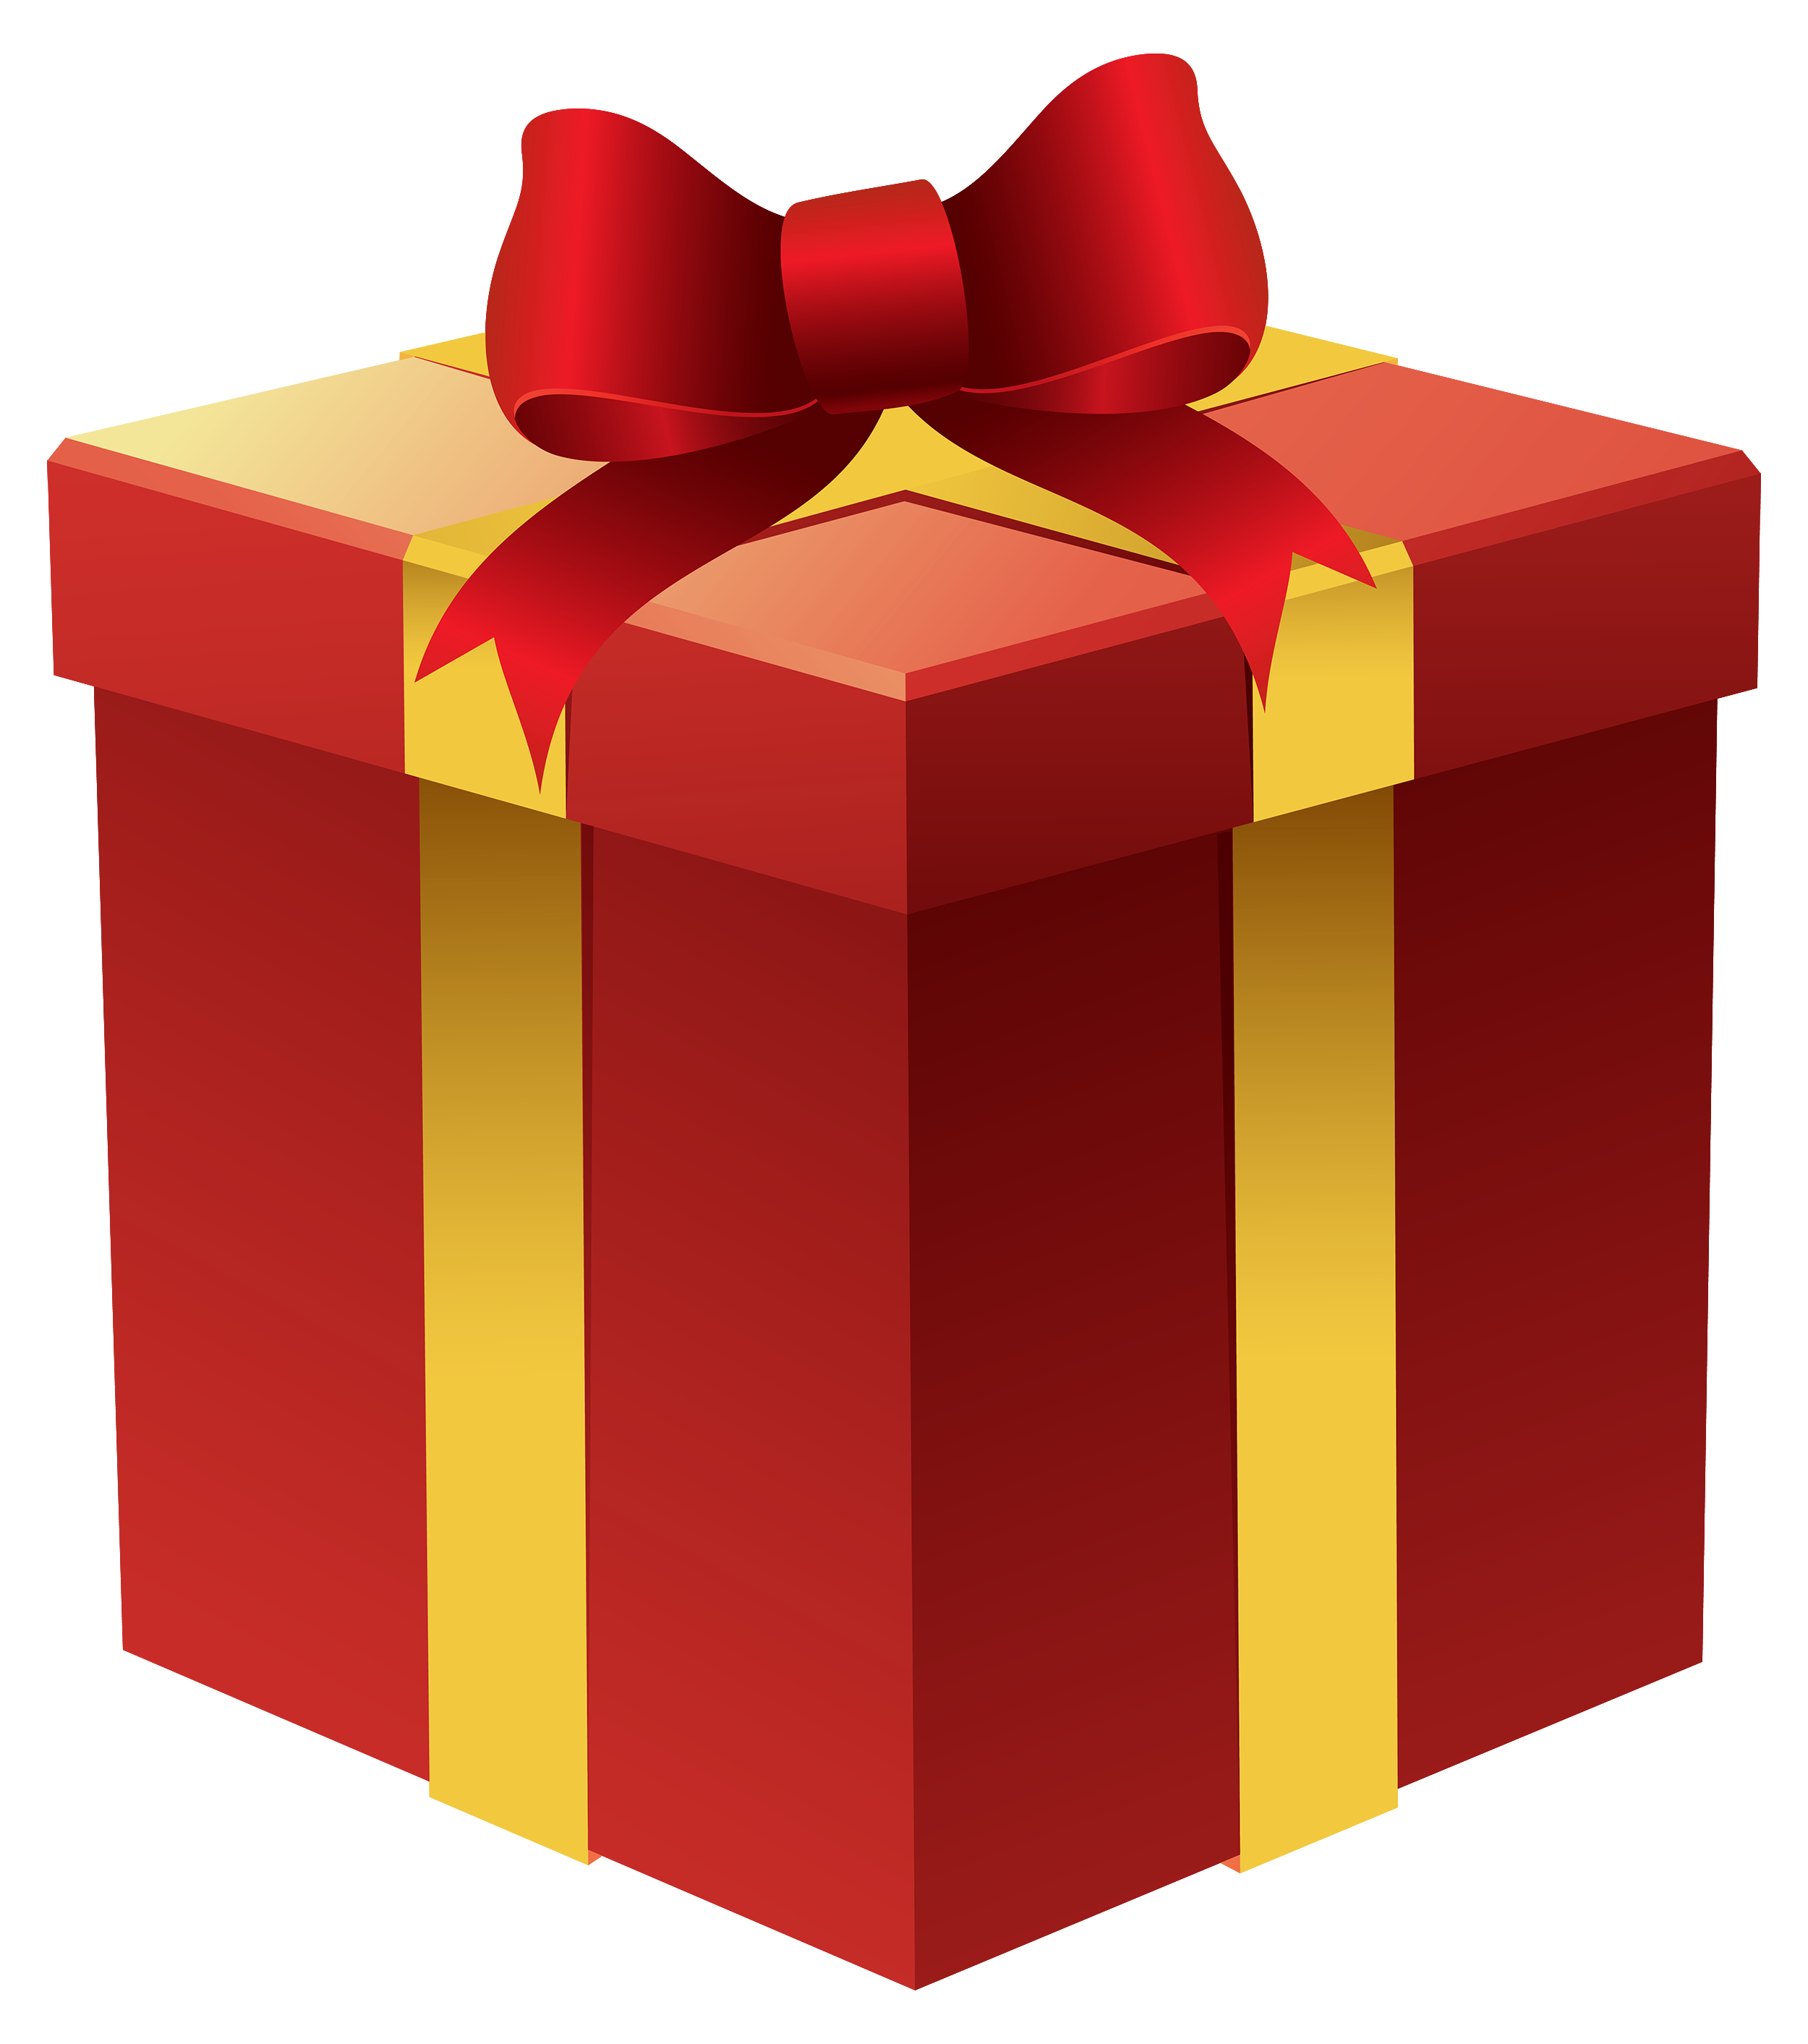 Open gift box clipart - .